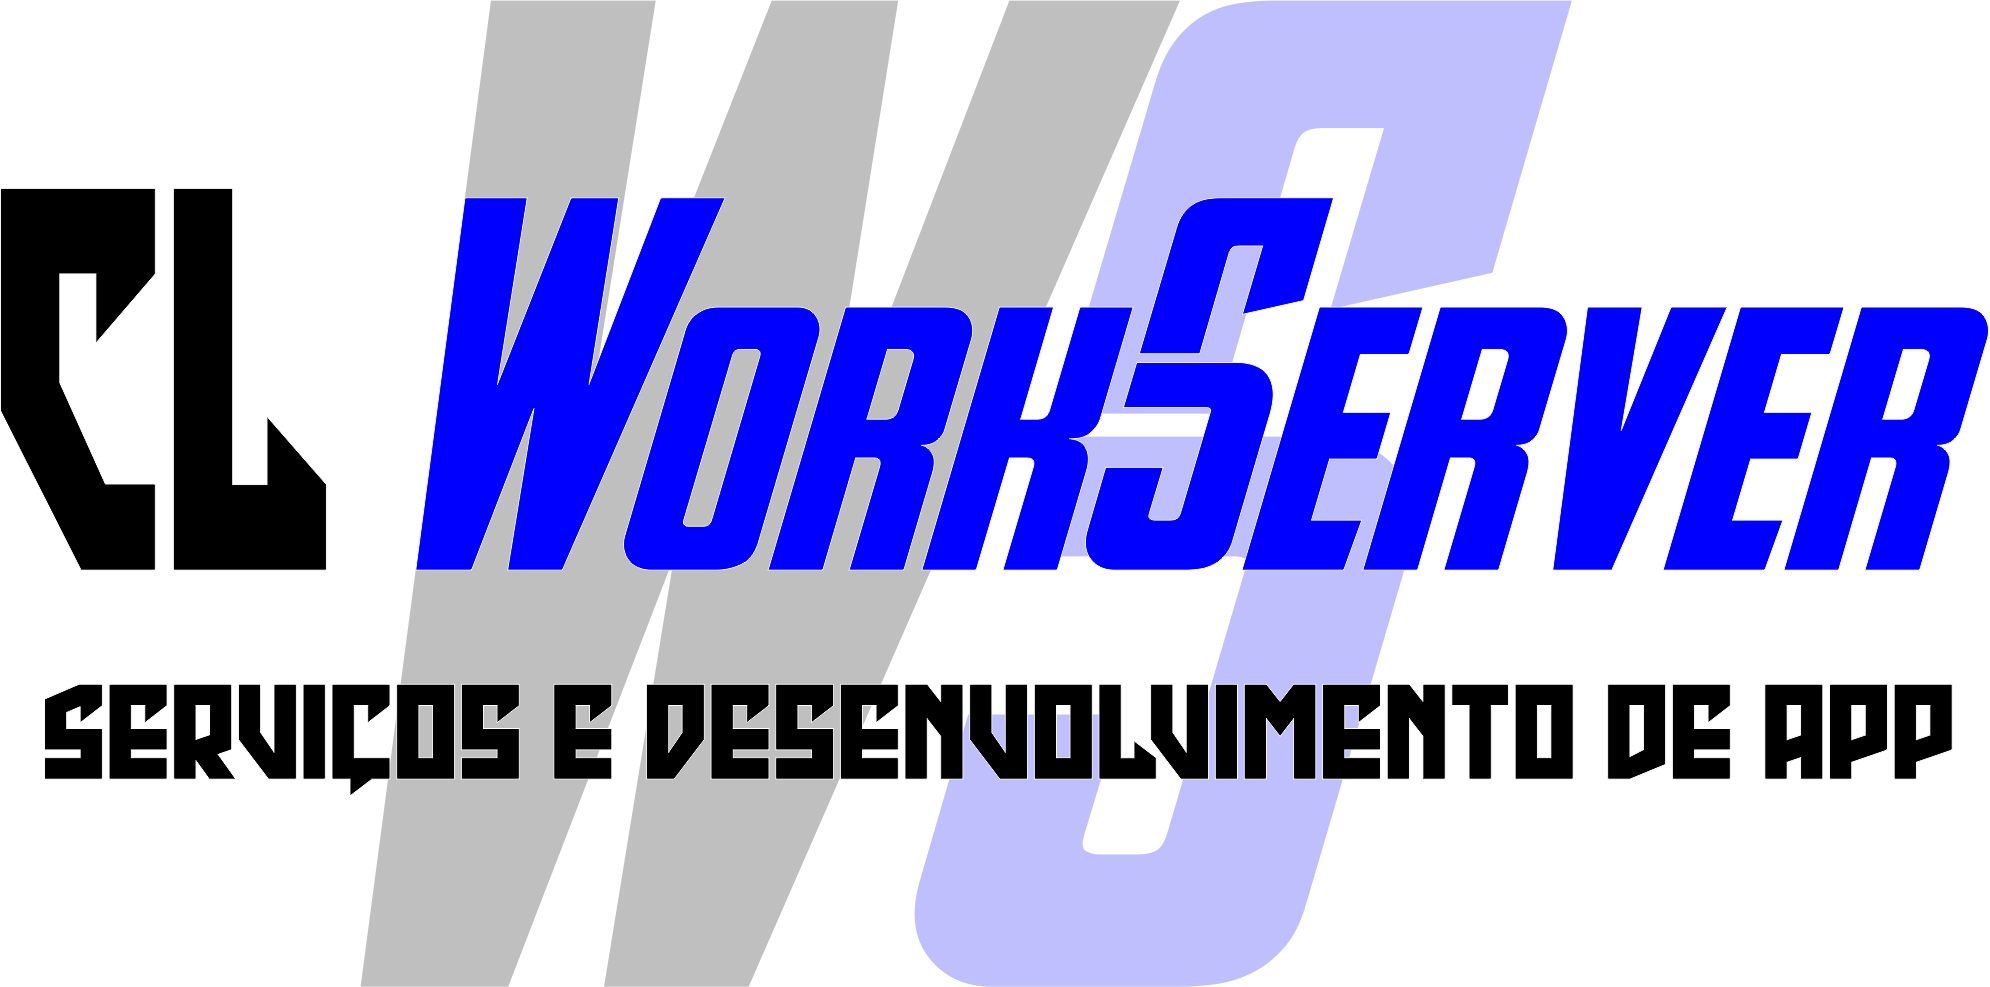 CL Work Server Logo